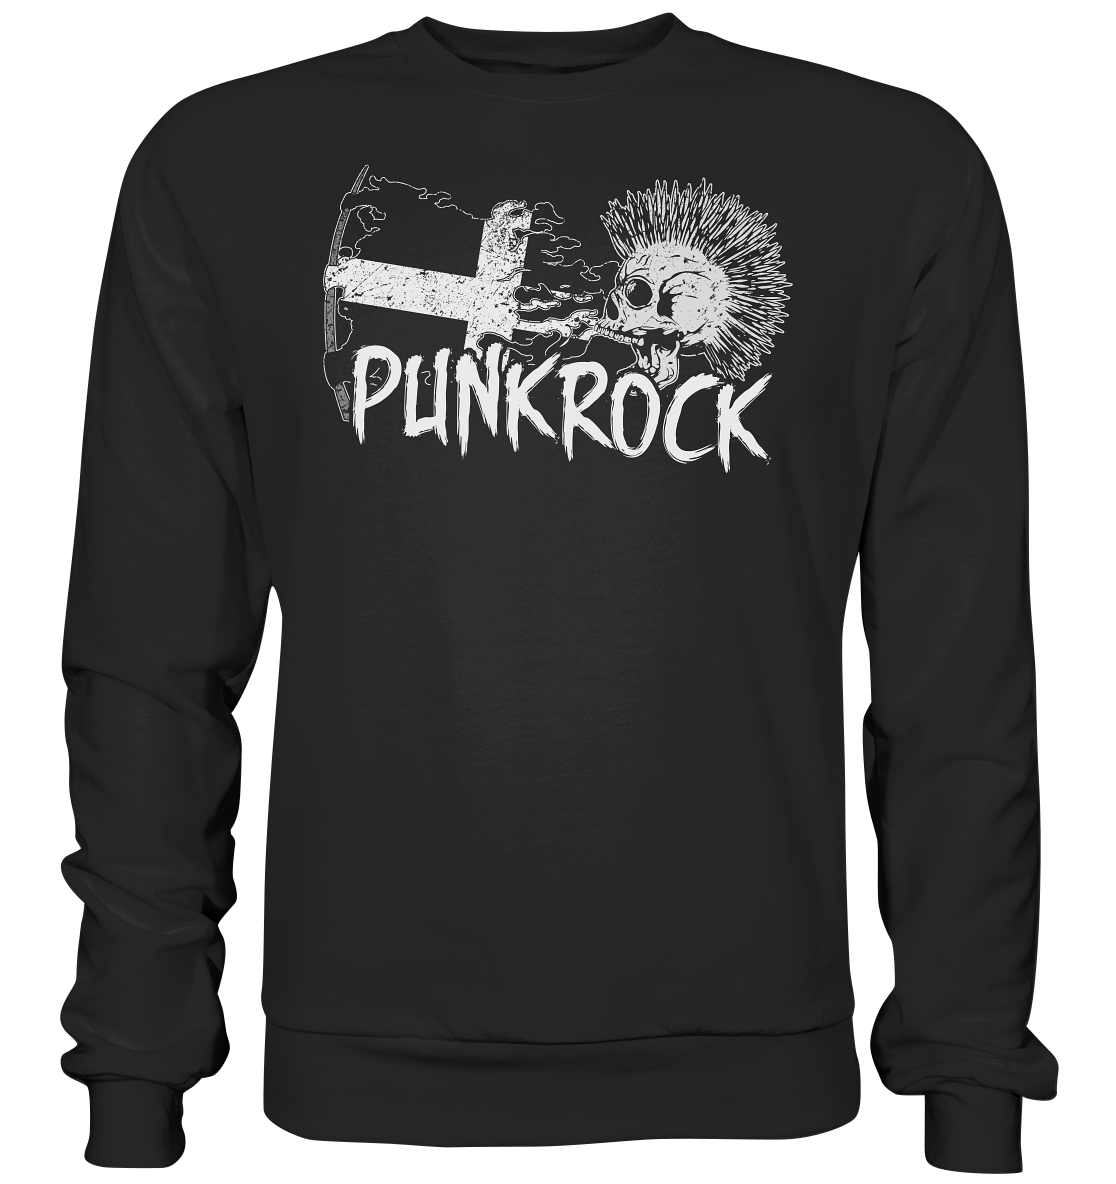 Punkrock "Cornwall" - Premium Sweatshirt